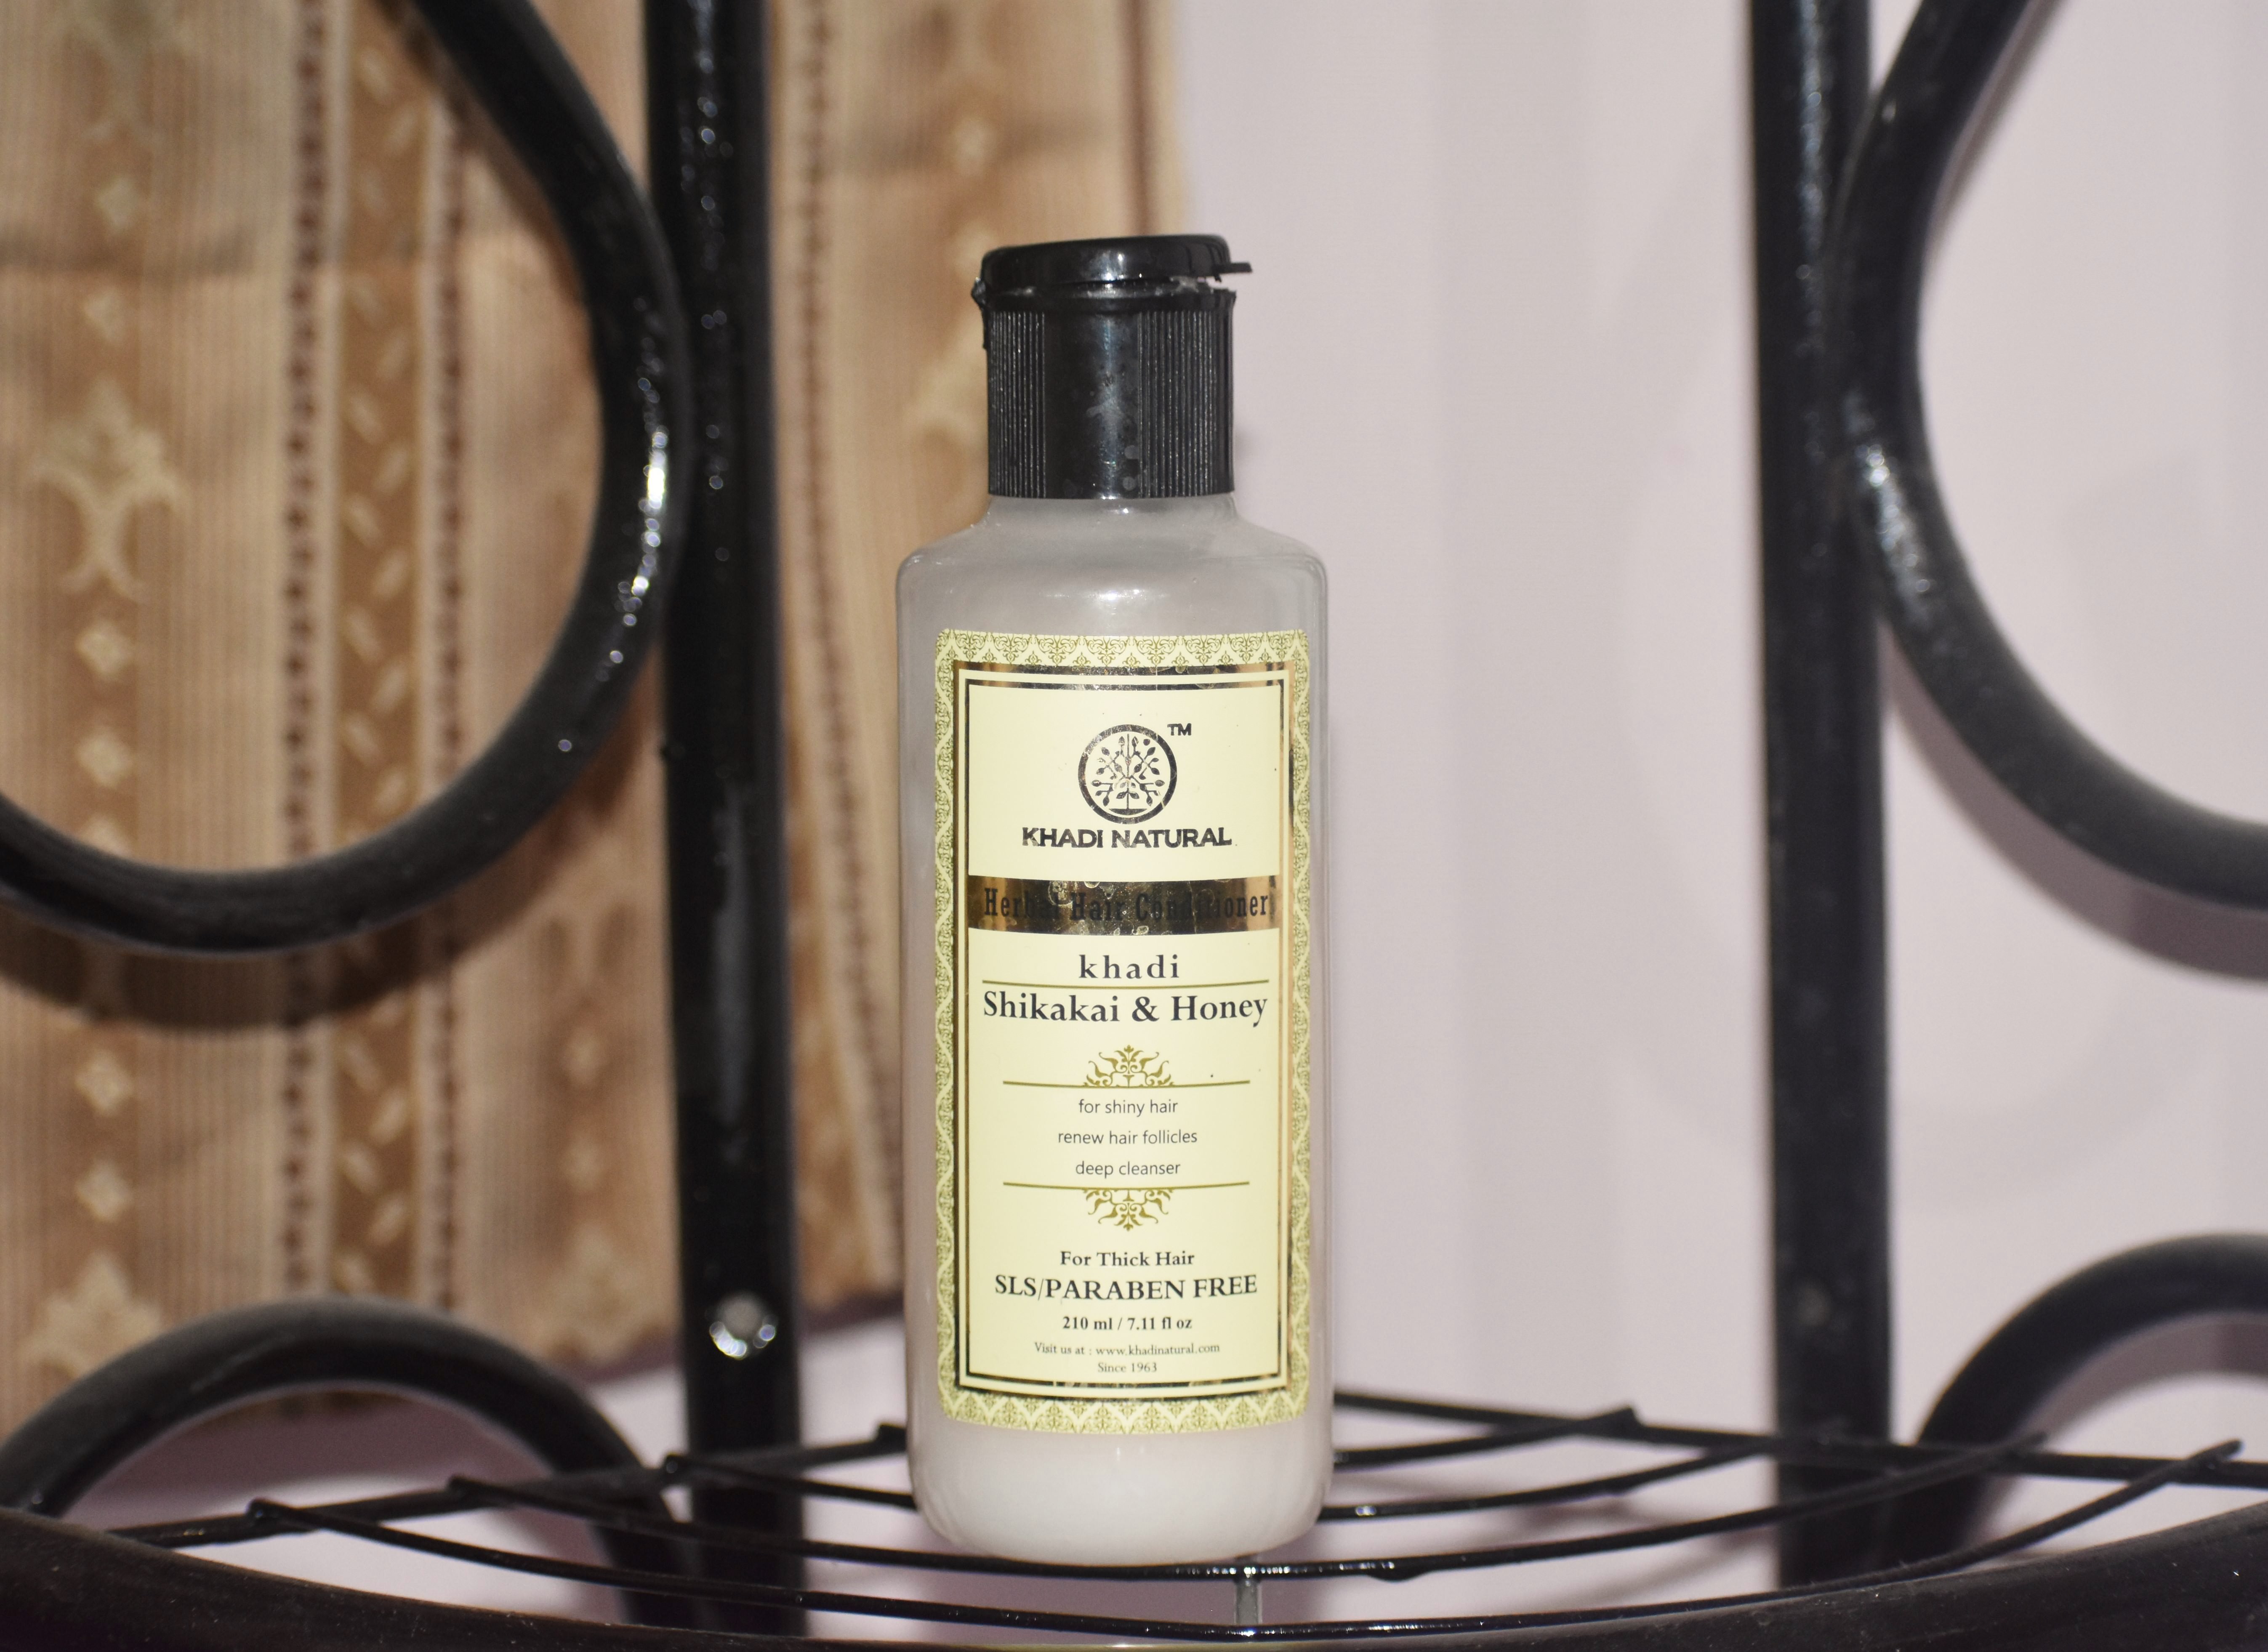 Khadi Natural Shikakai & Honey Herbal Hair Conditioner | Review